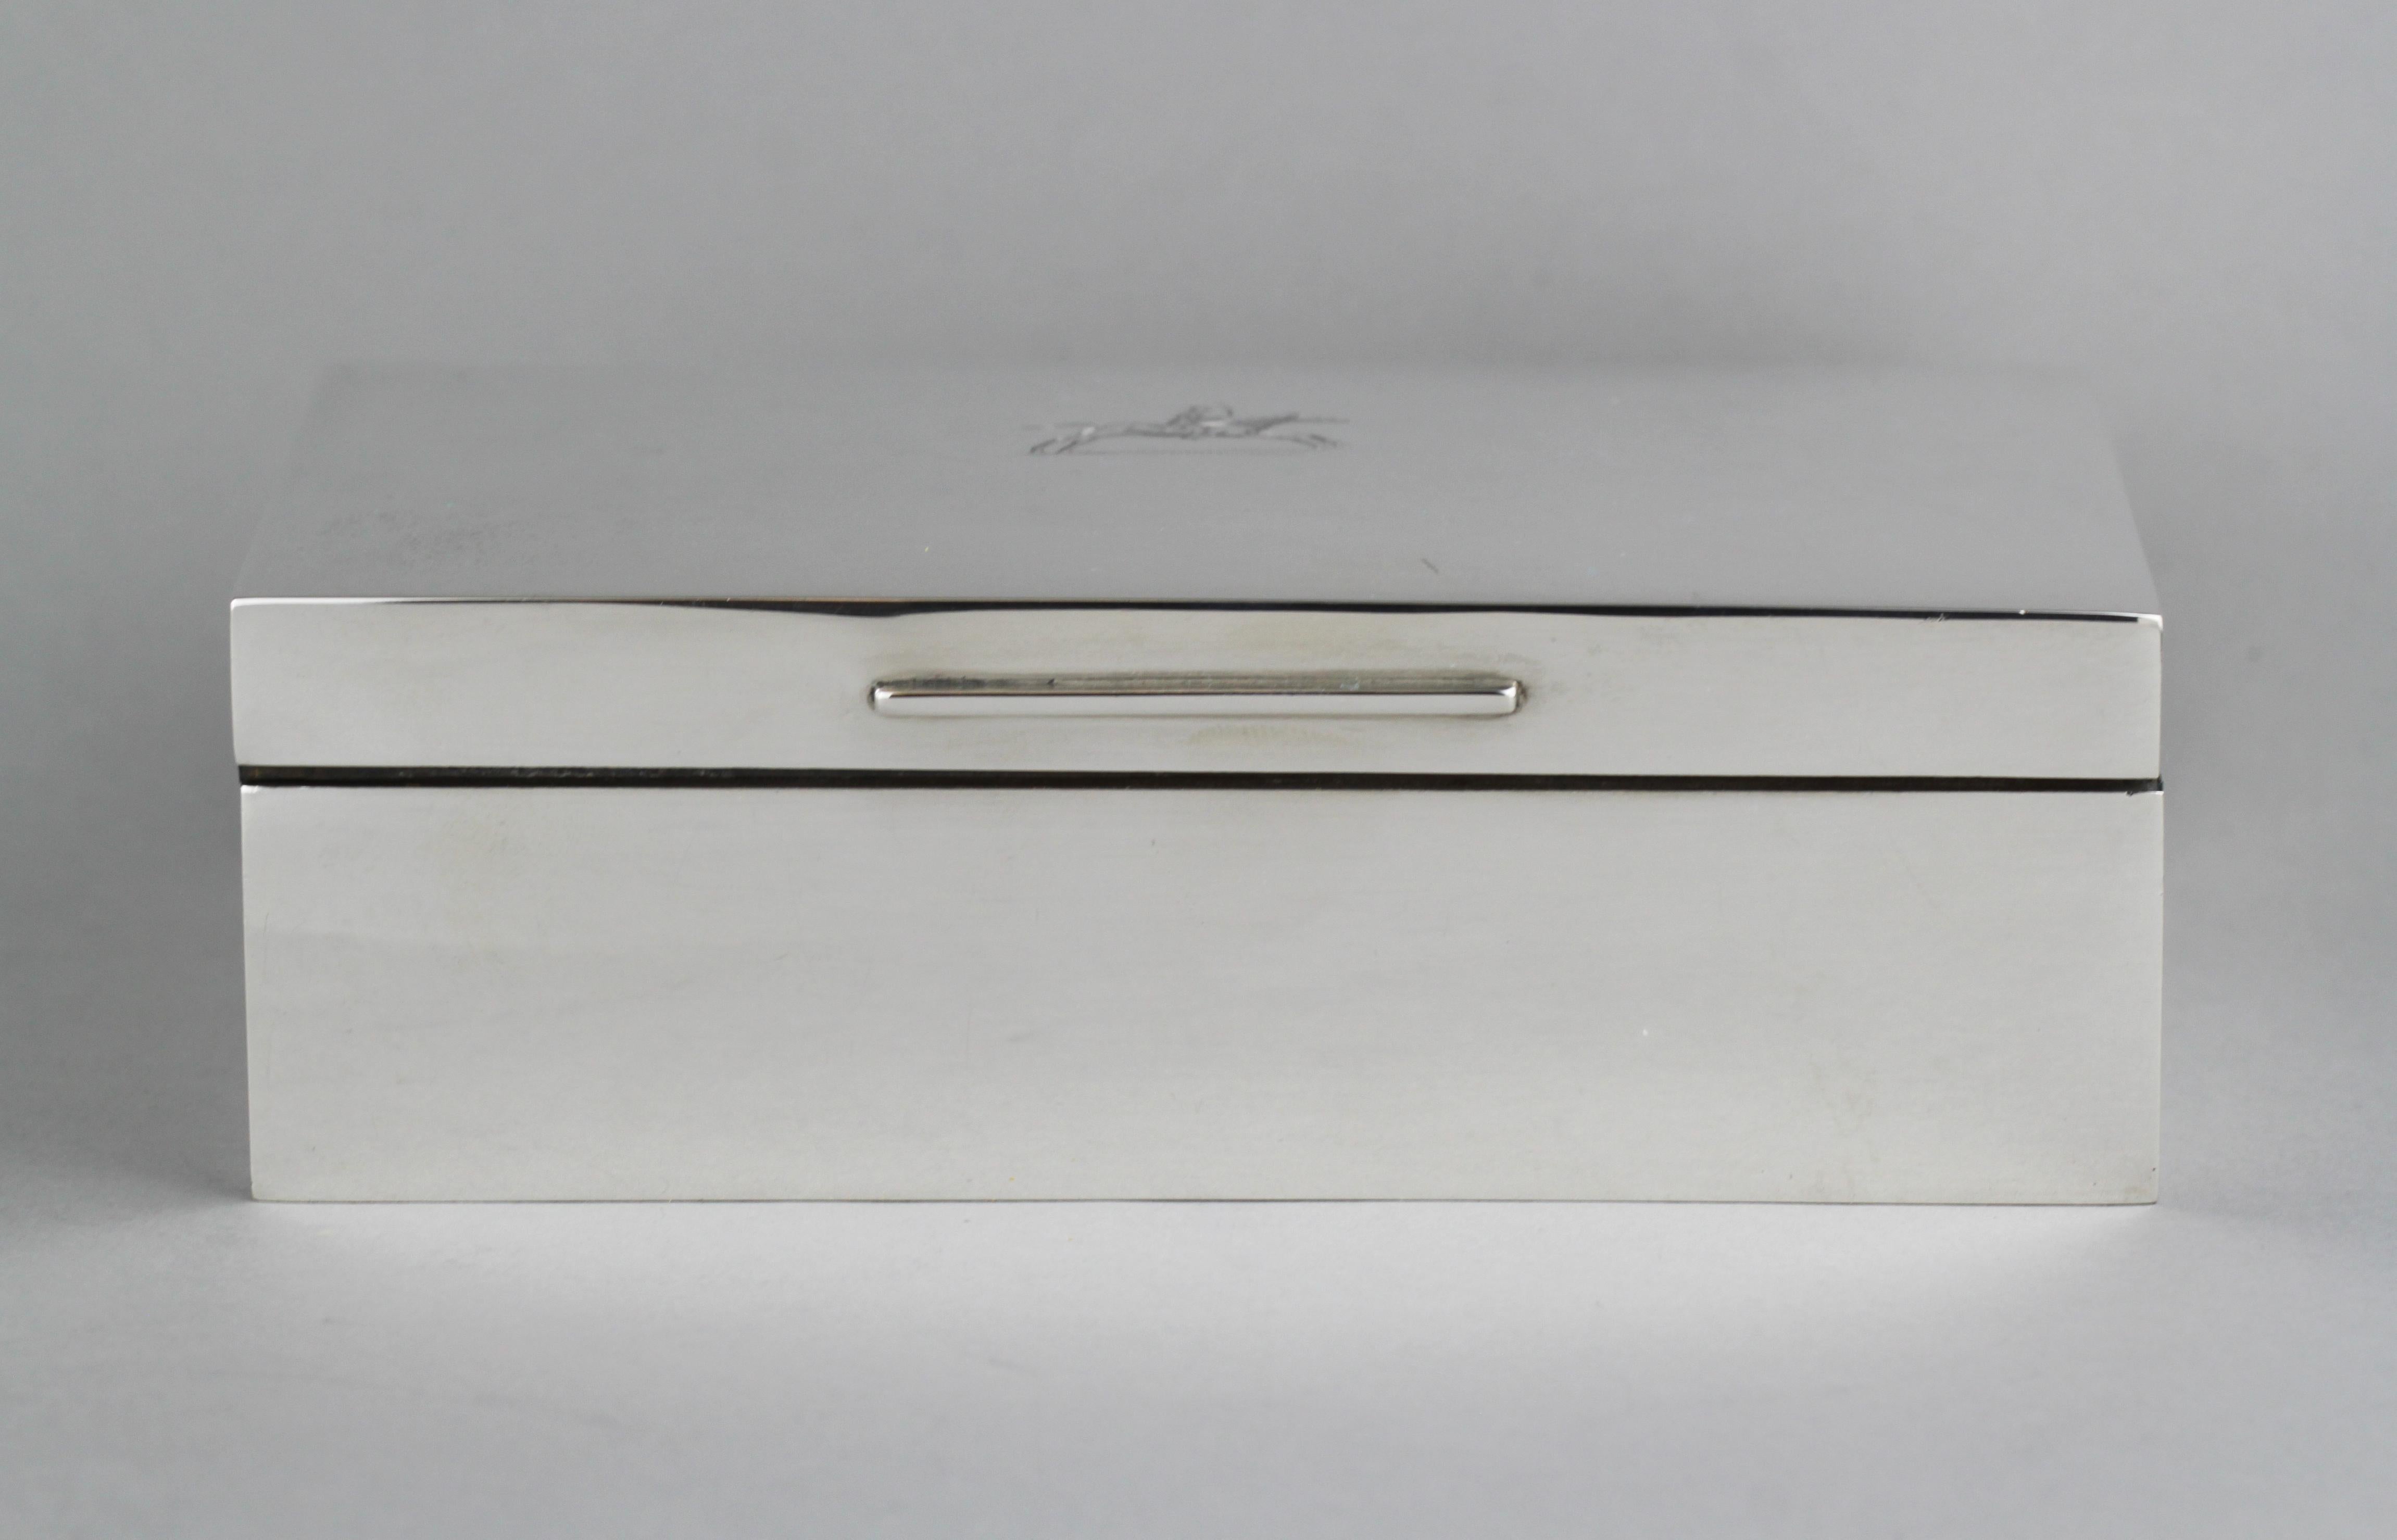 British Sterling Silver Cigar Box with Wooden Interior, by Padgett & Braham Ltd, 1985